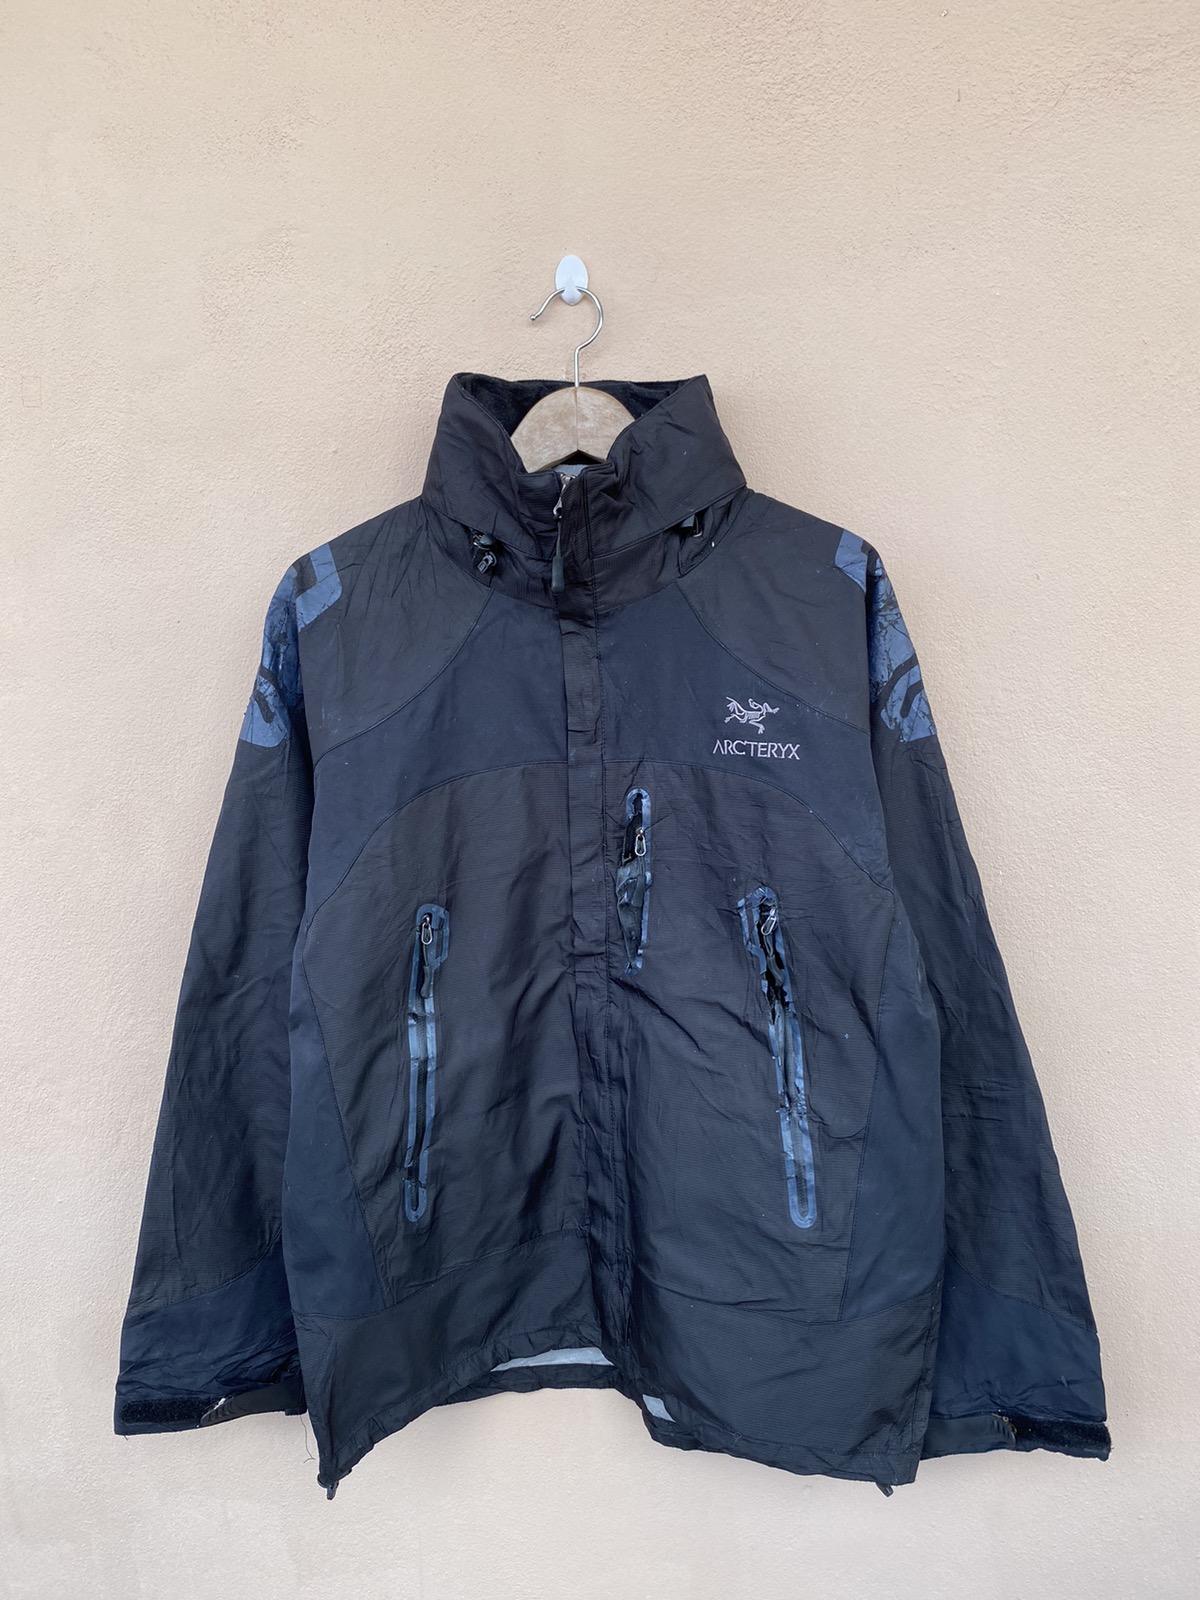 Arcteryx Waterproof Jacket - 1